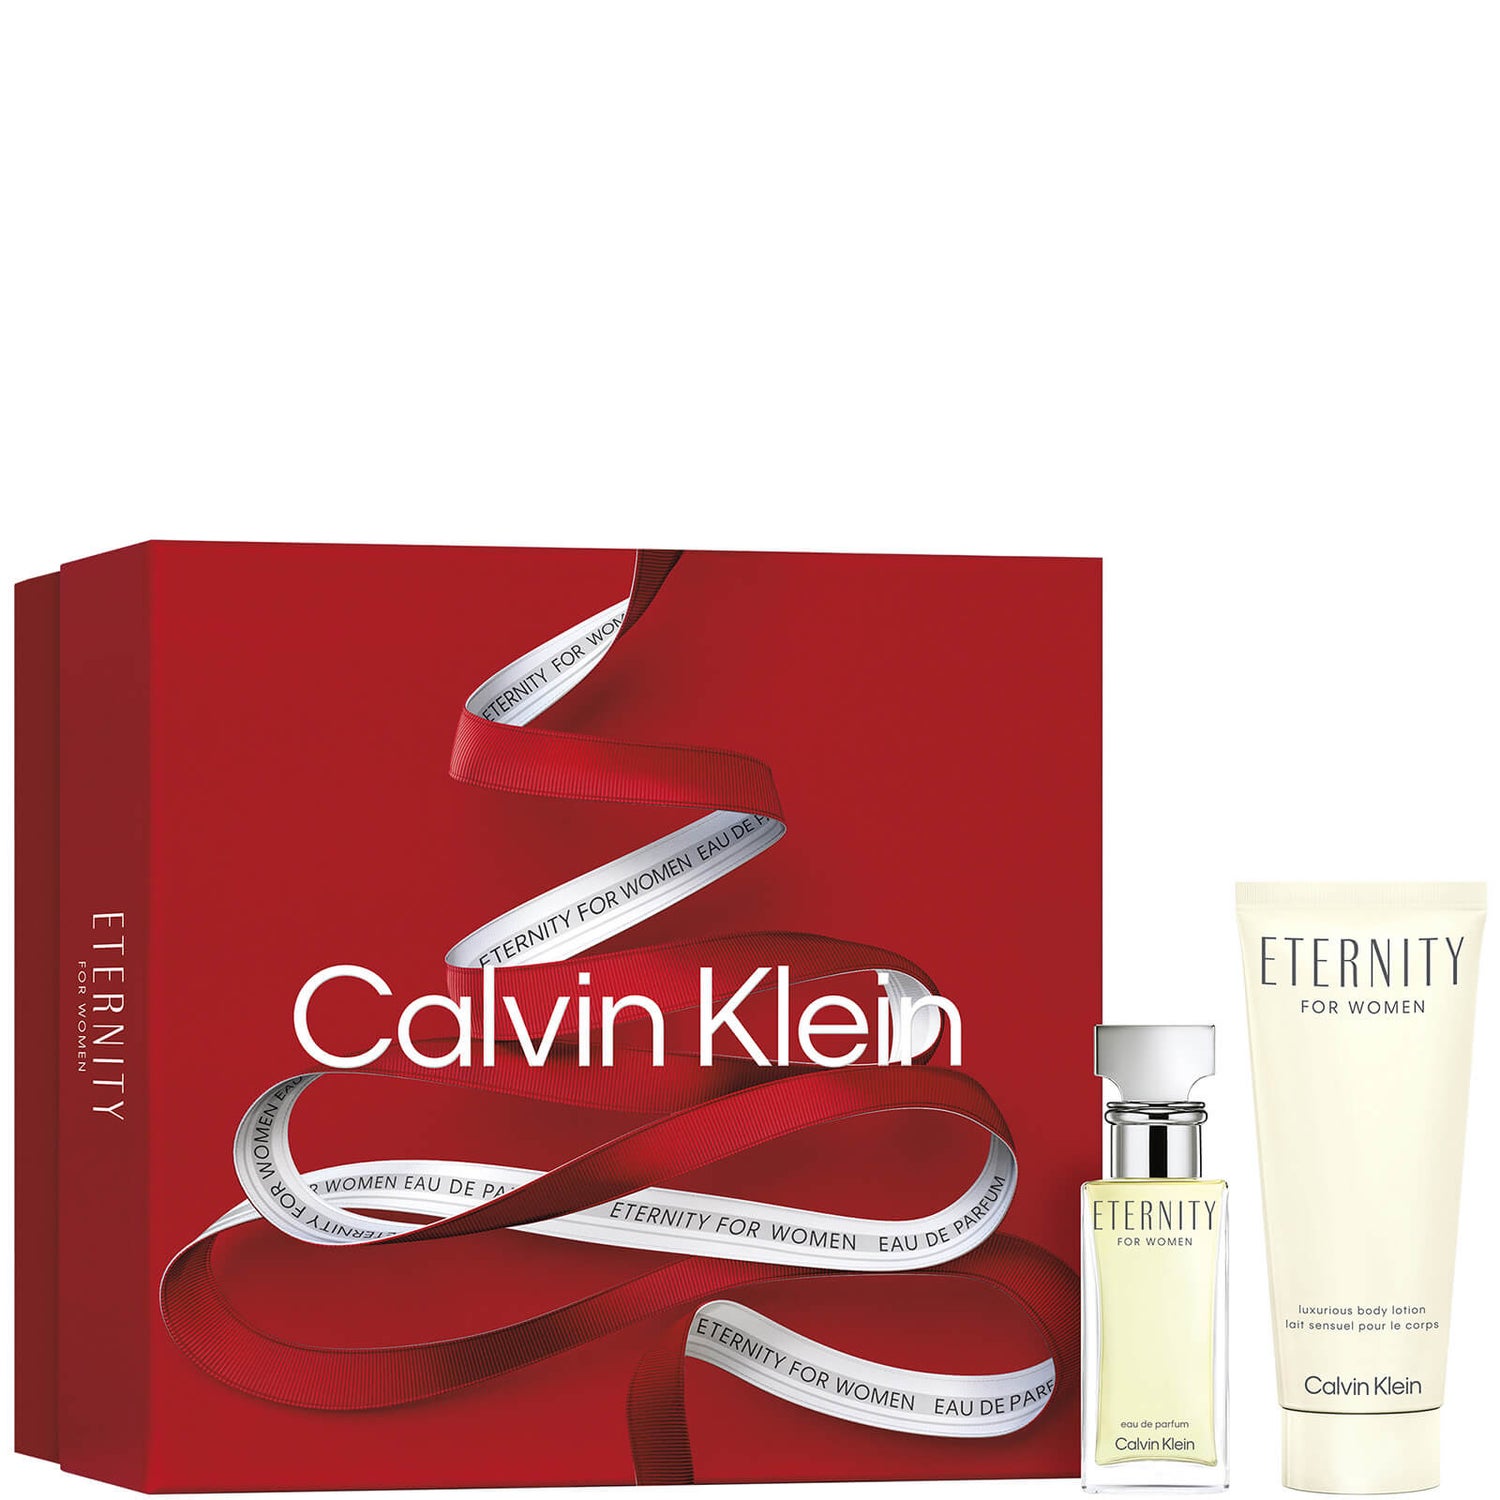 Calvin Klein Eternity for Women Eau de Parfum 30ml Gift Set (Worth £45.00)